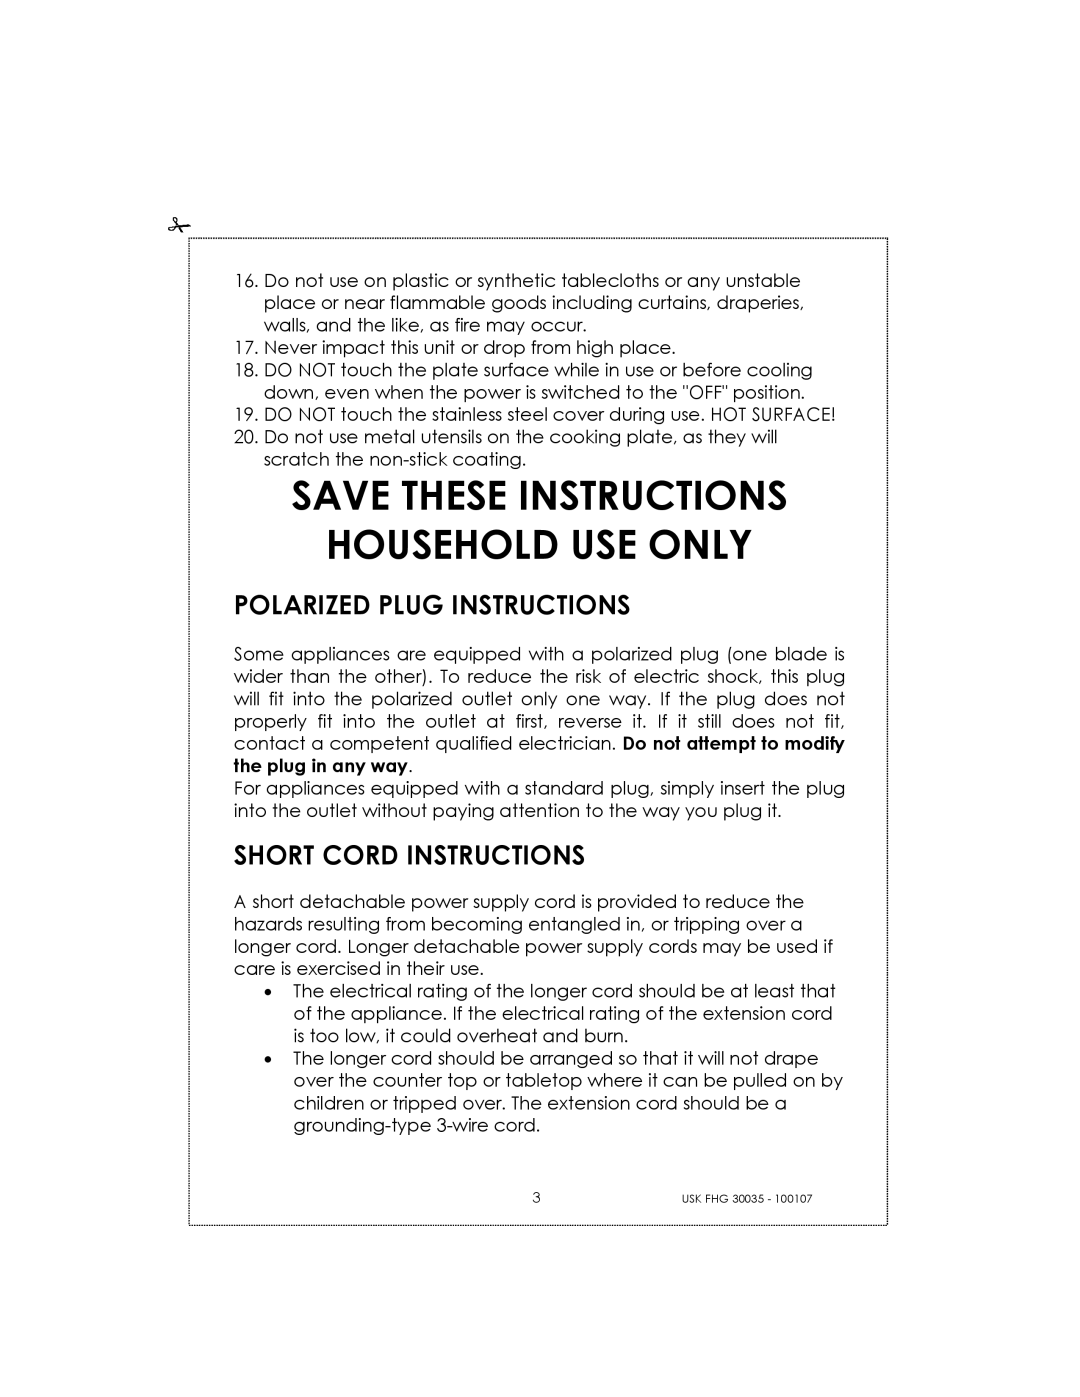 Kalorik 30035, 31025 manual Save These Instructions Household Use Only, Polarized Plug Instructions, Short Cord Instructions 